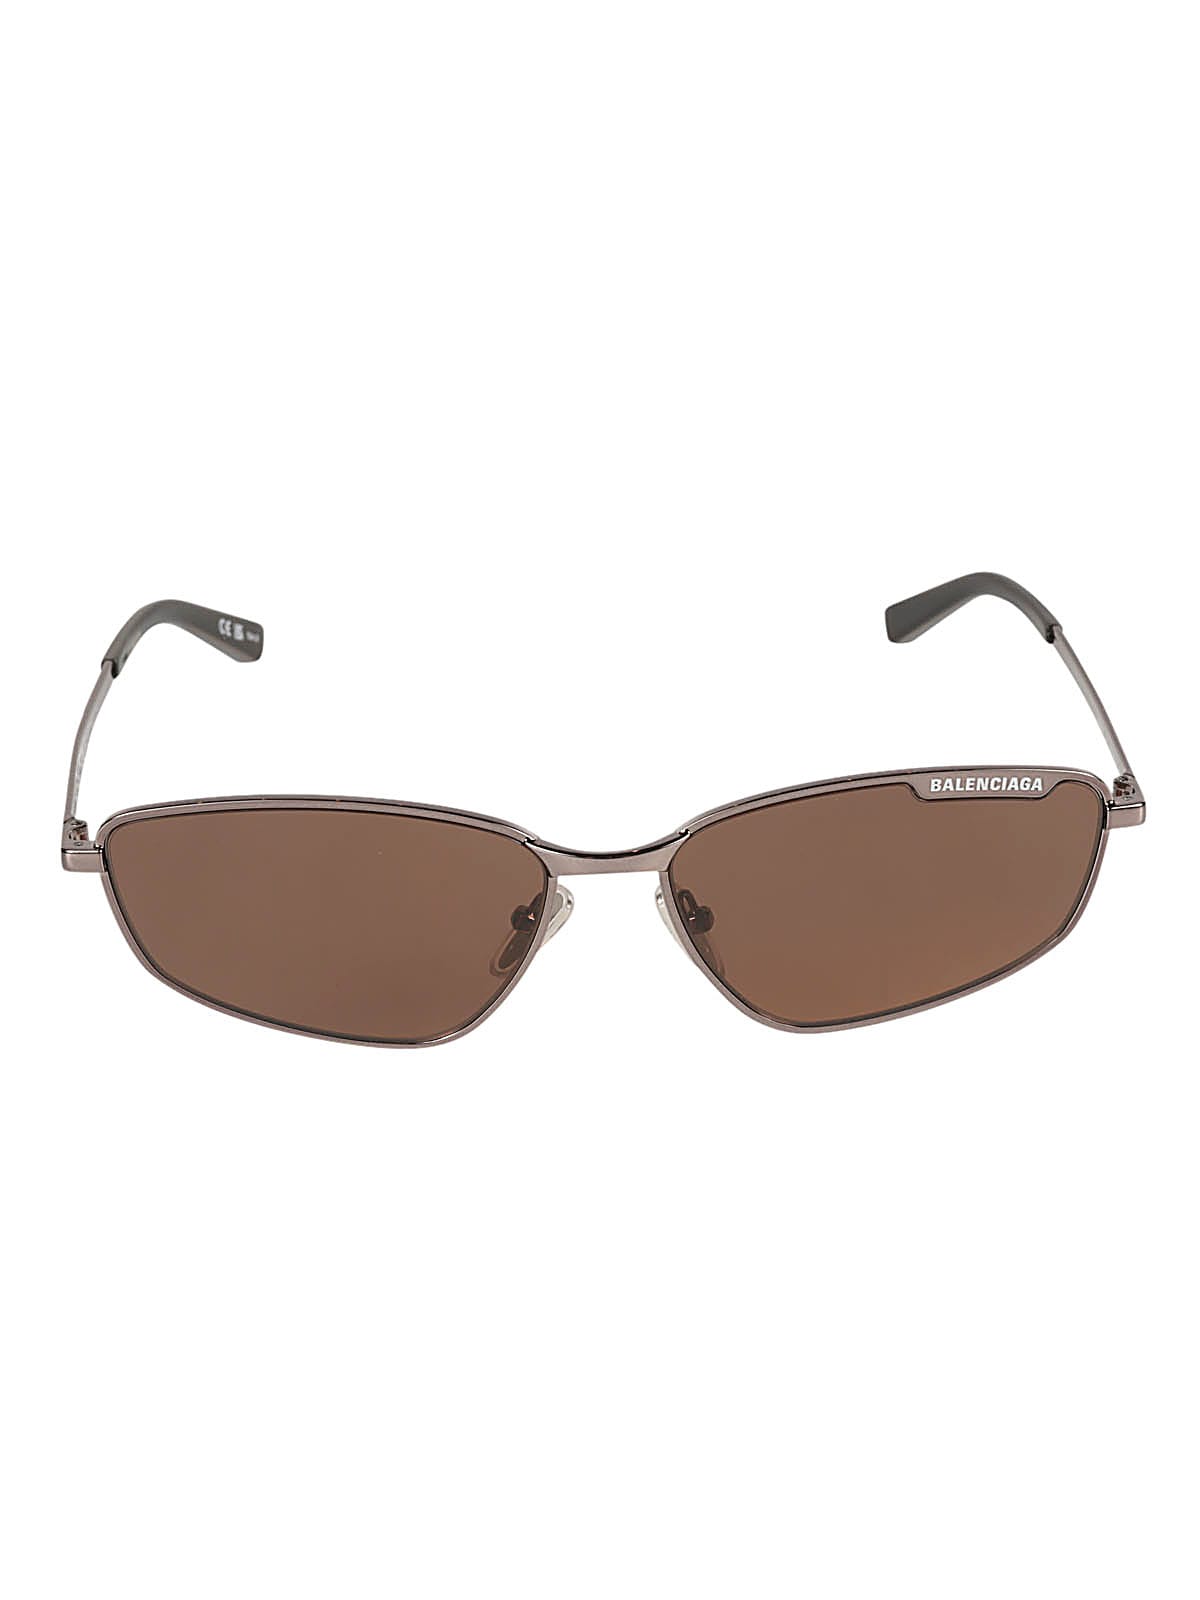 Balenciaga Rectangular Frame Logo Sunglasses In Ruthenium/brown